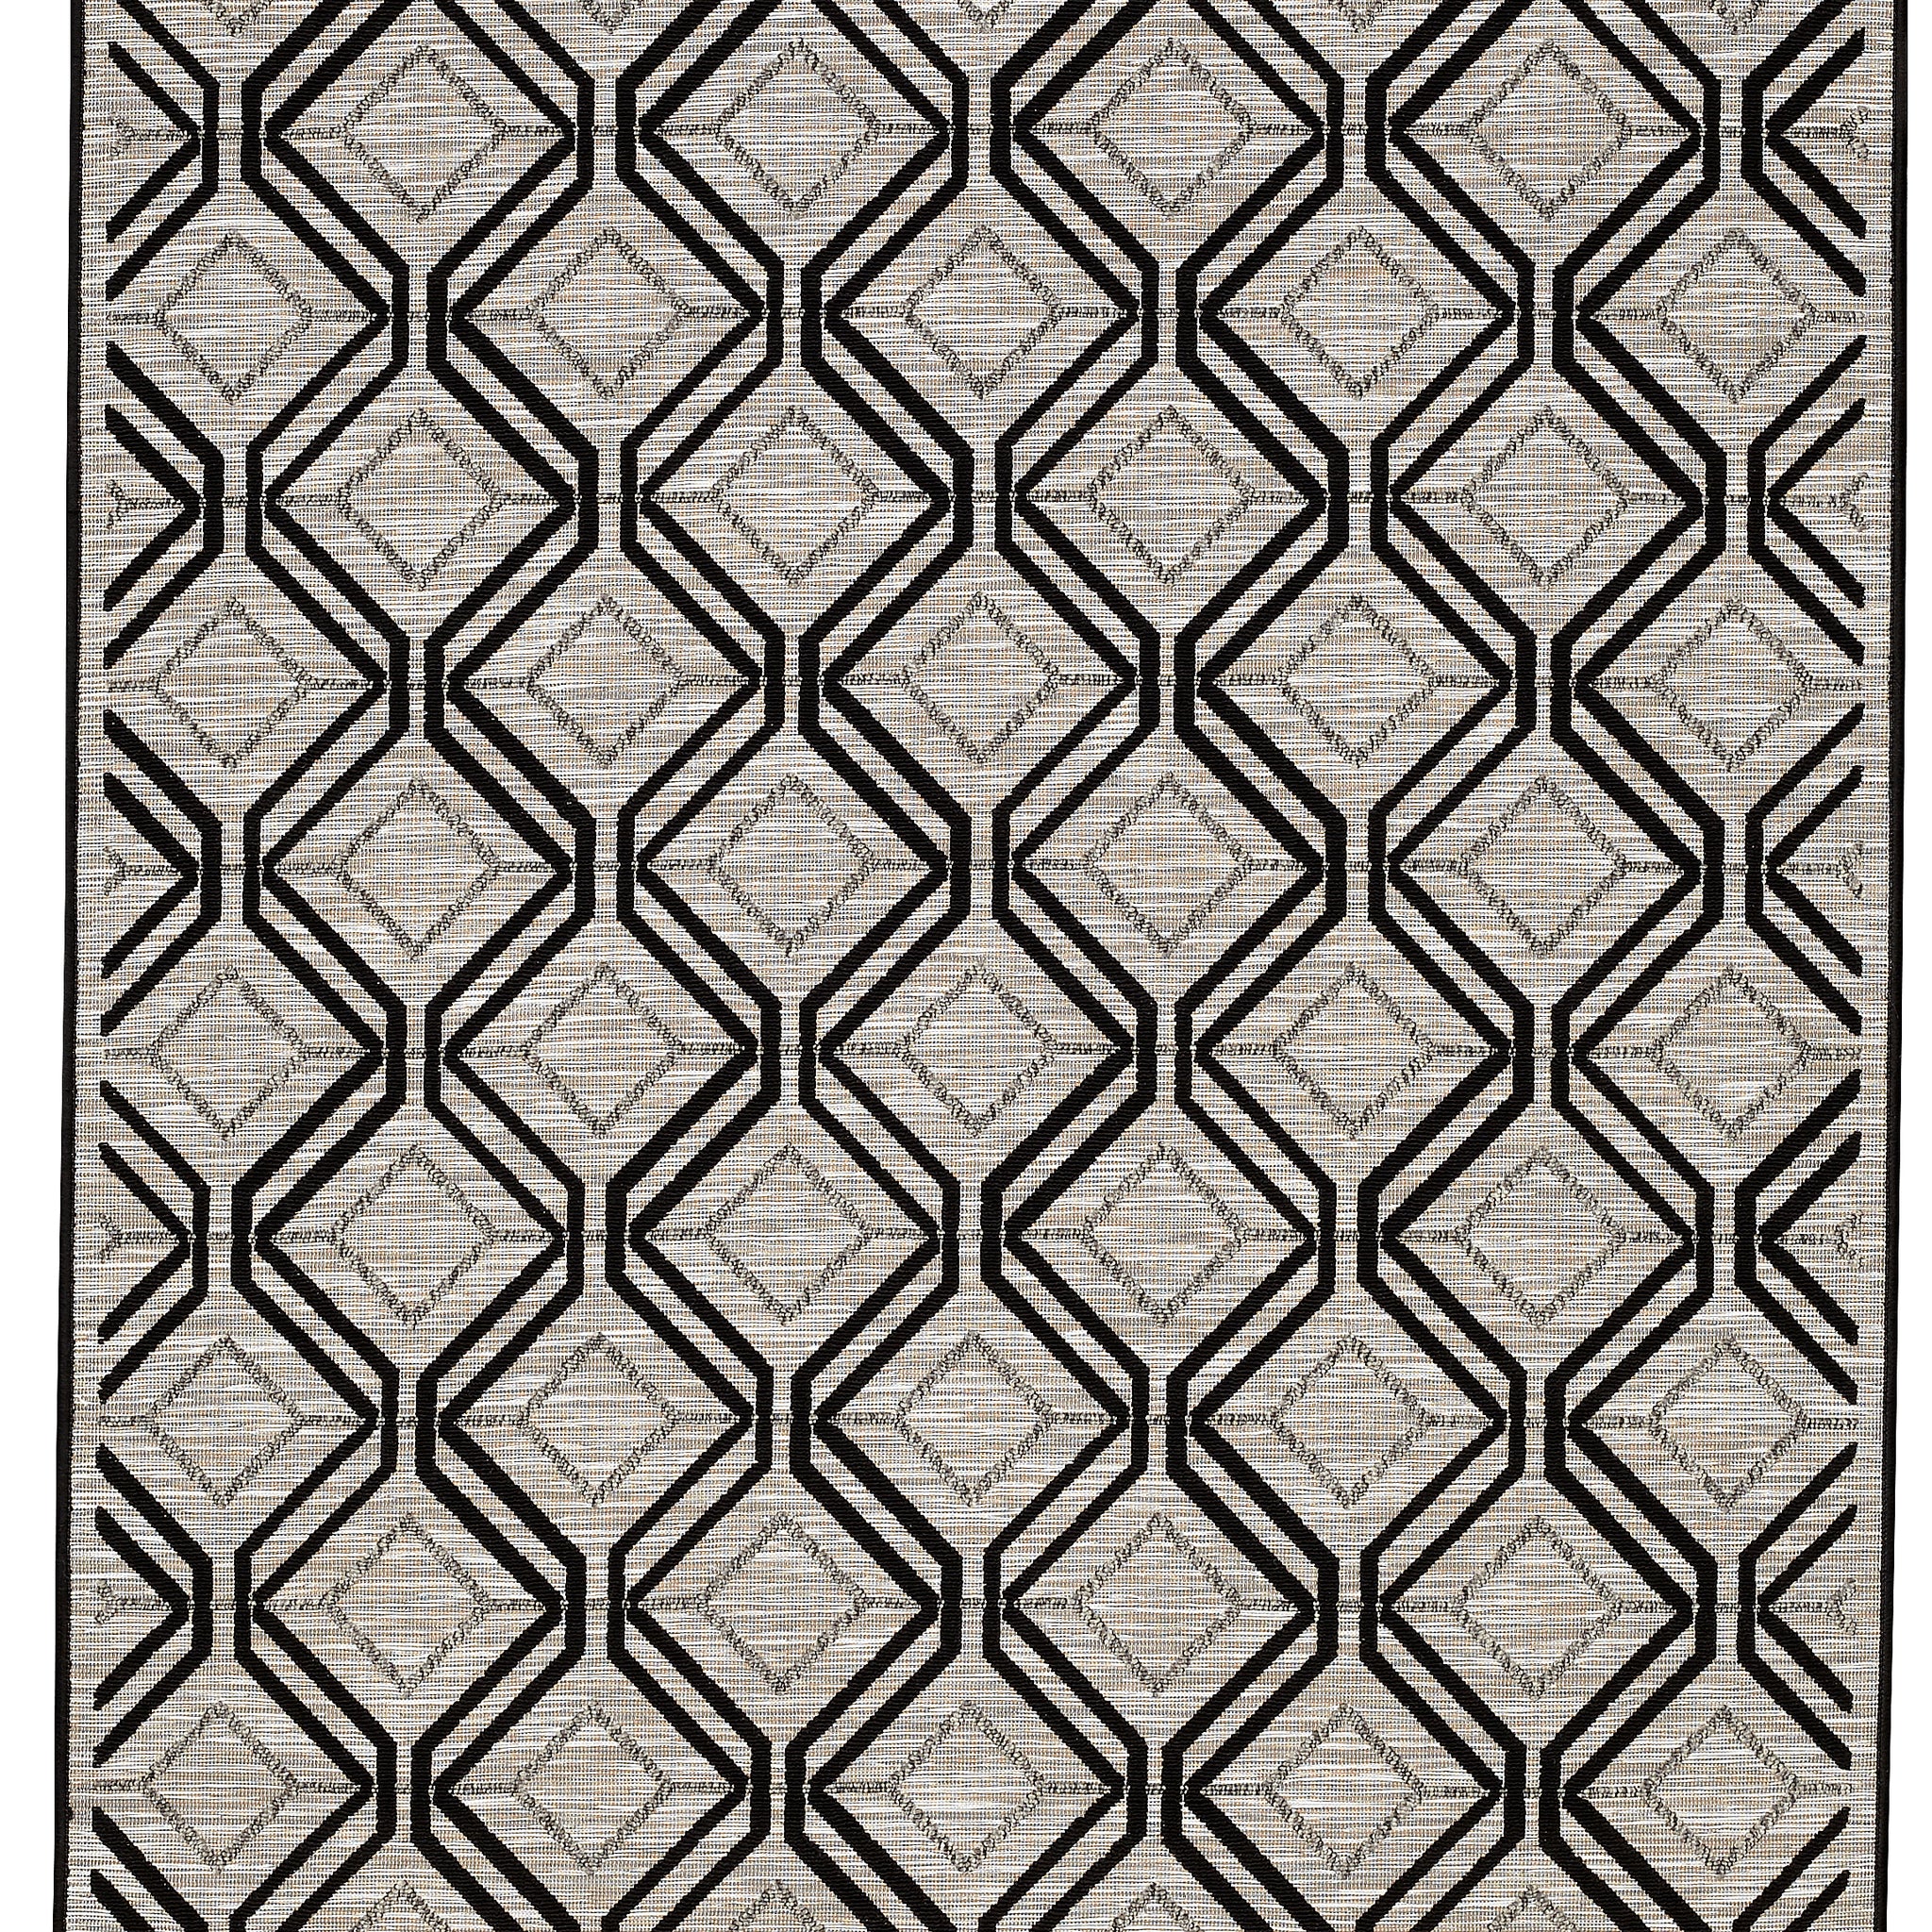 Modern Contemporary Polypropylene Trellis Black Grey Rug - Erbanica